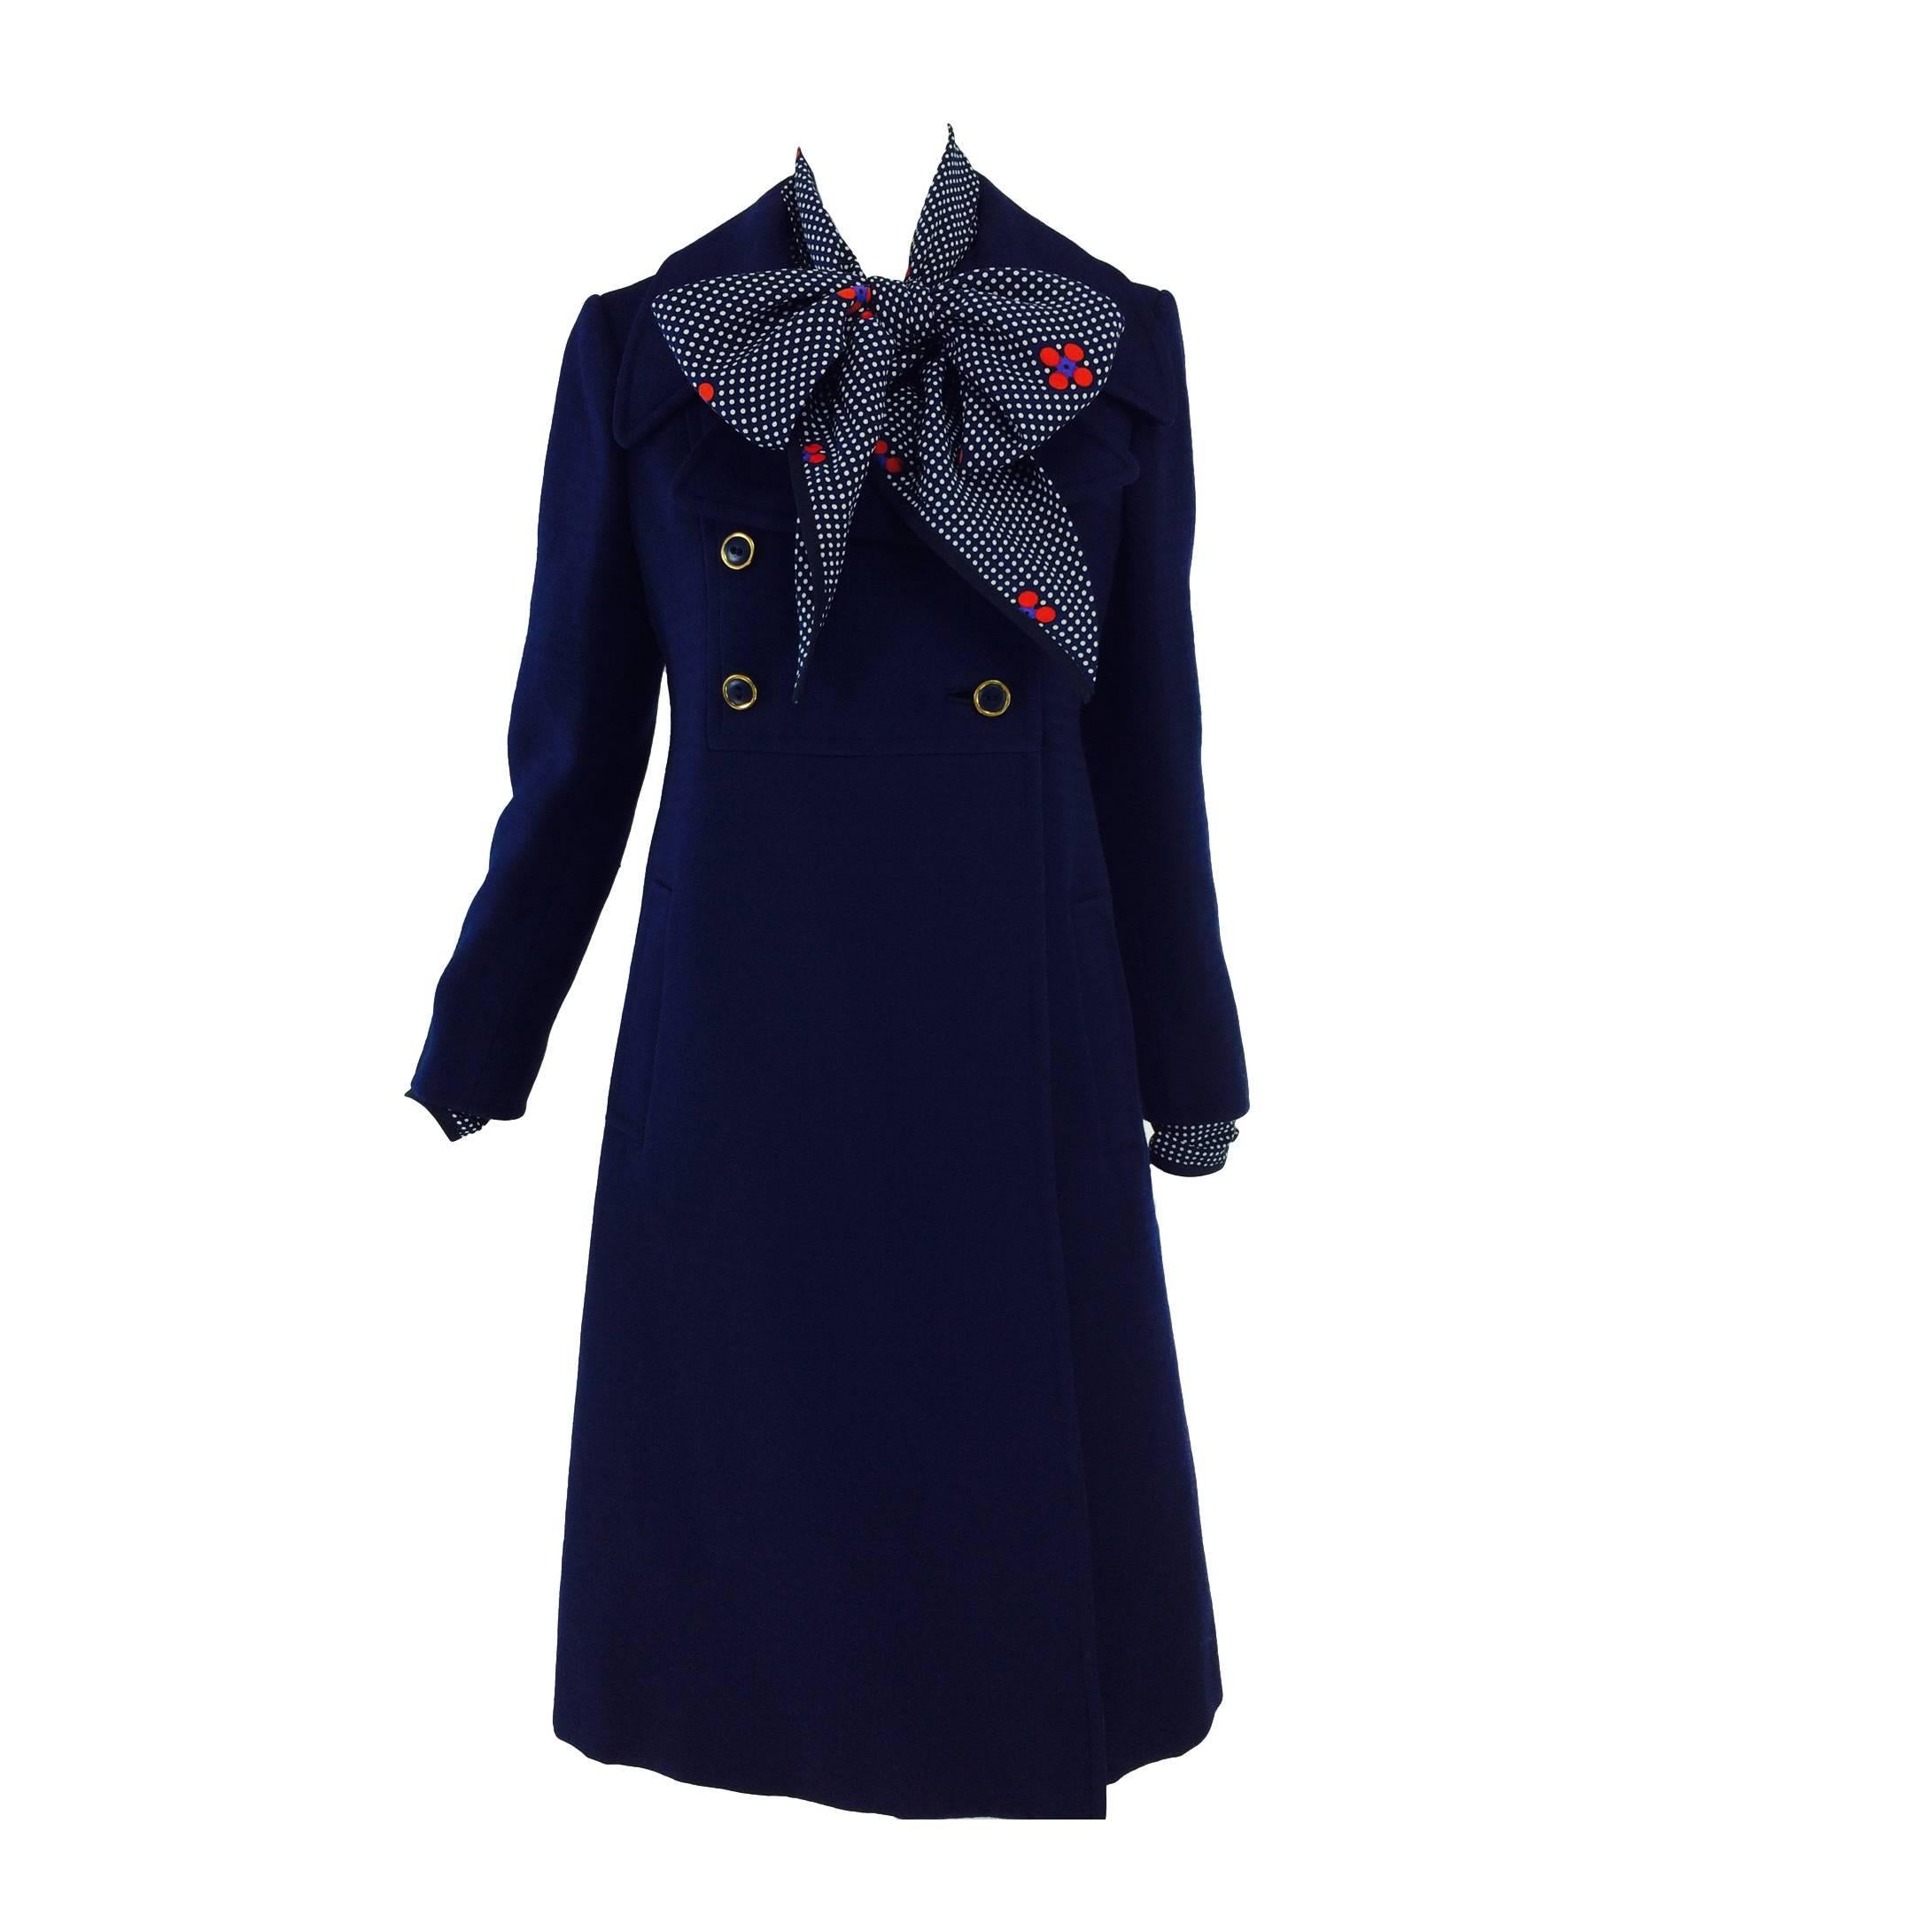 Geoffrey Beene flower check dress & coat ensemble 1960s